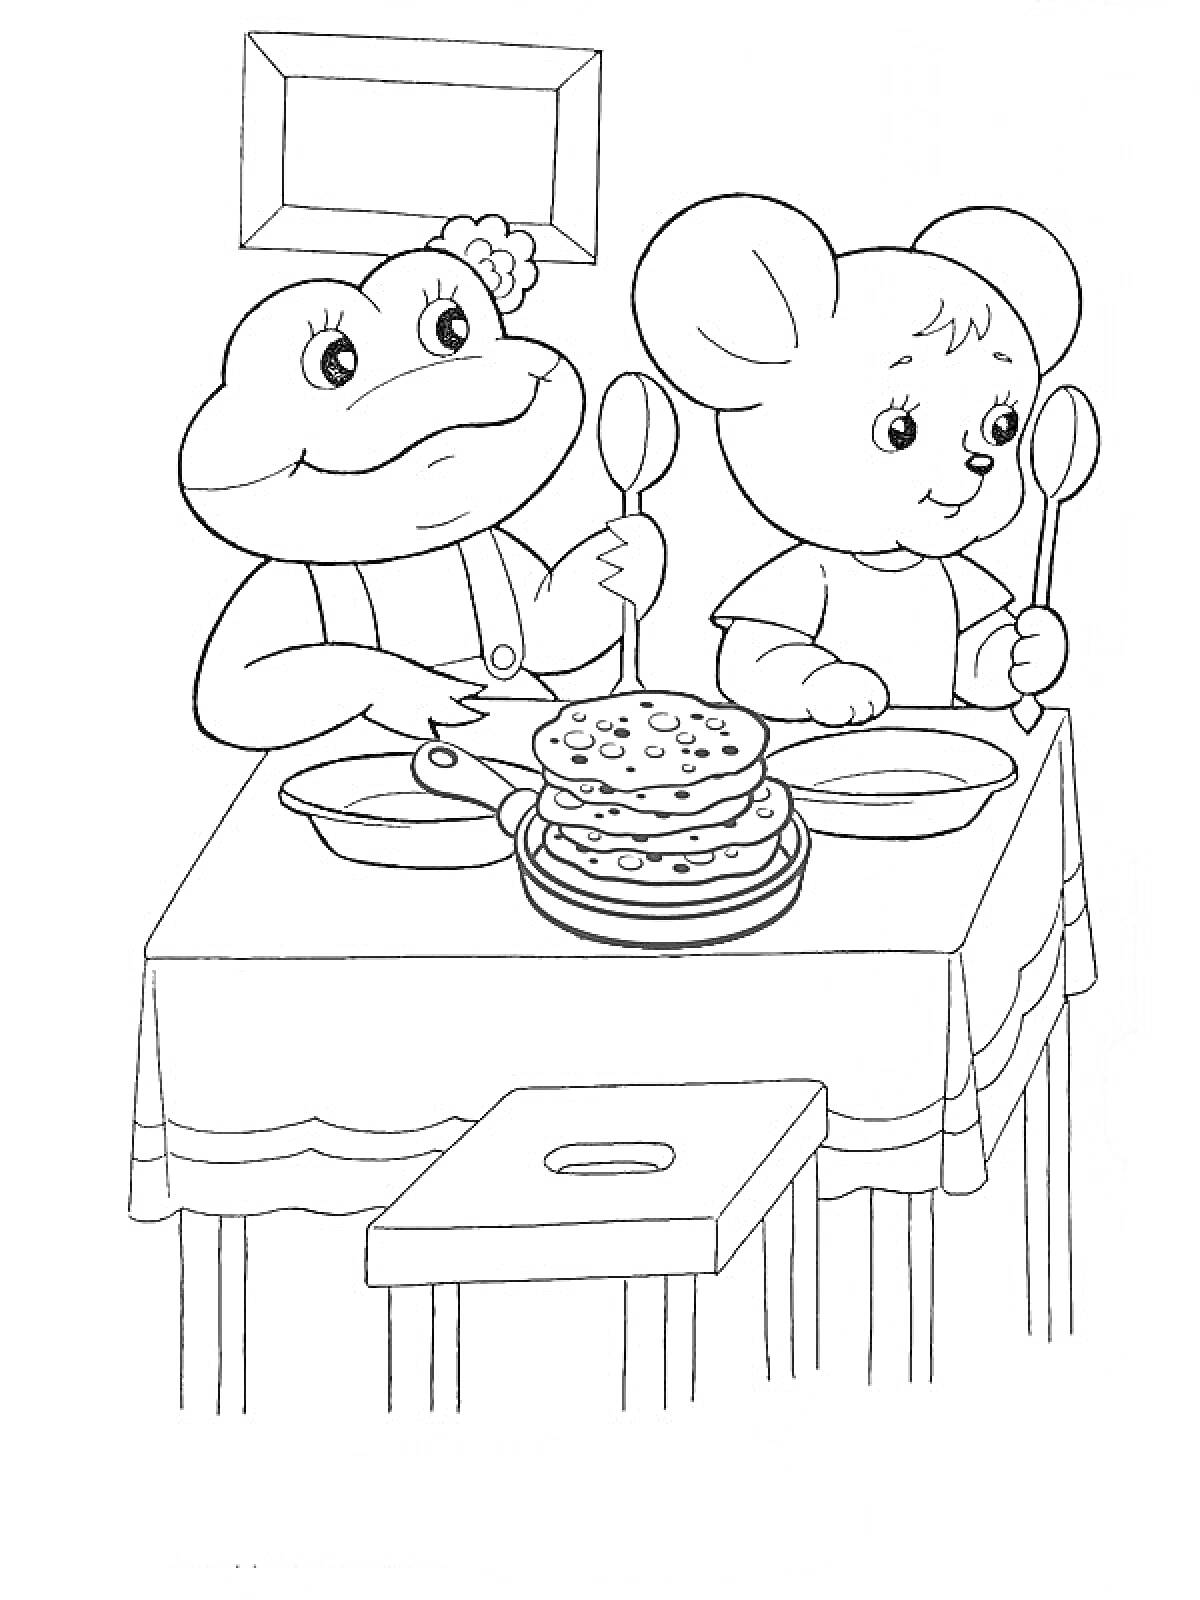 Раскраска Лягушка и мышонок за столом с блинами, ложками и тарелками на фоне картины на стене